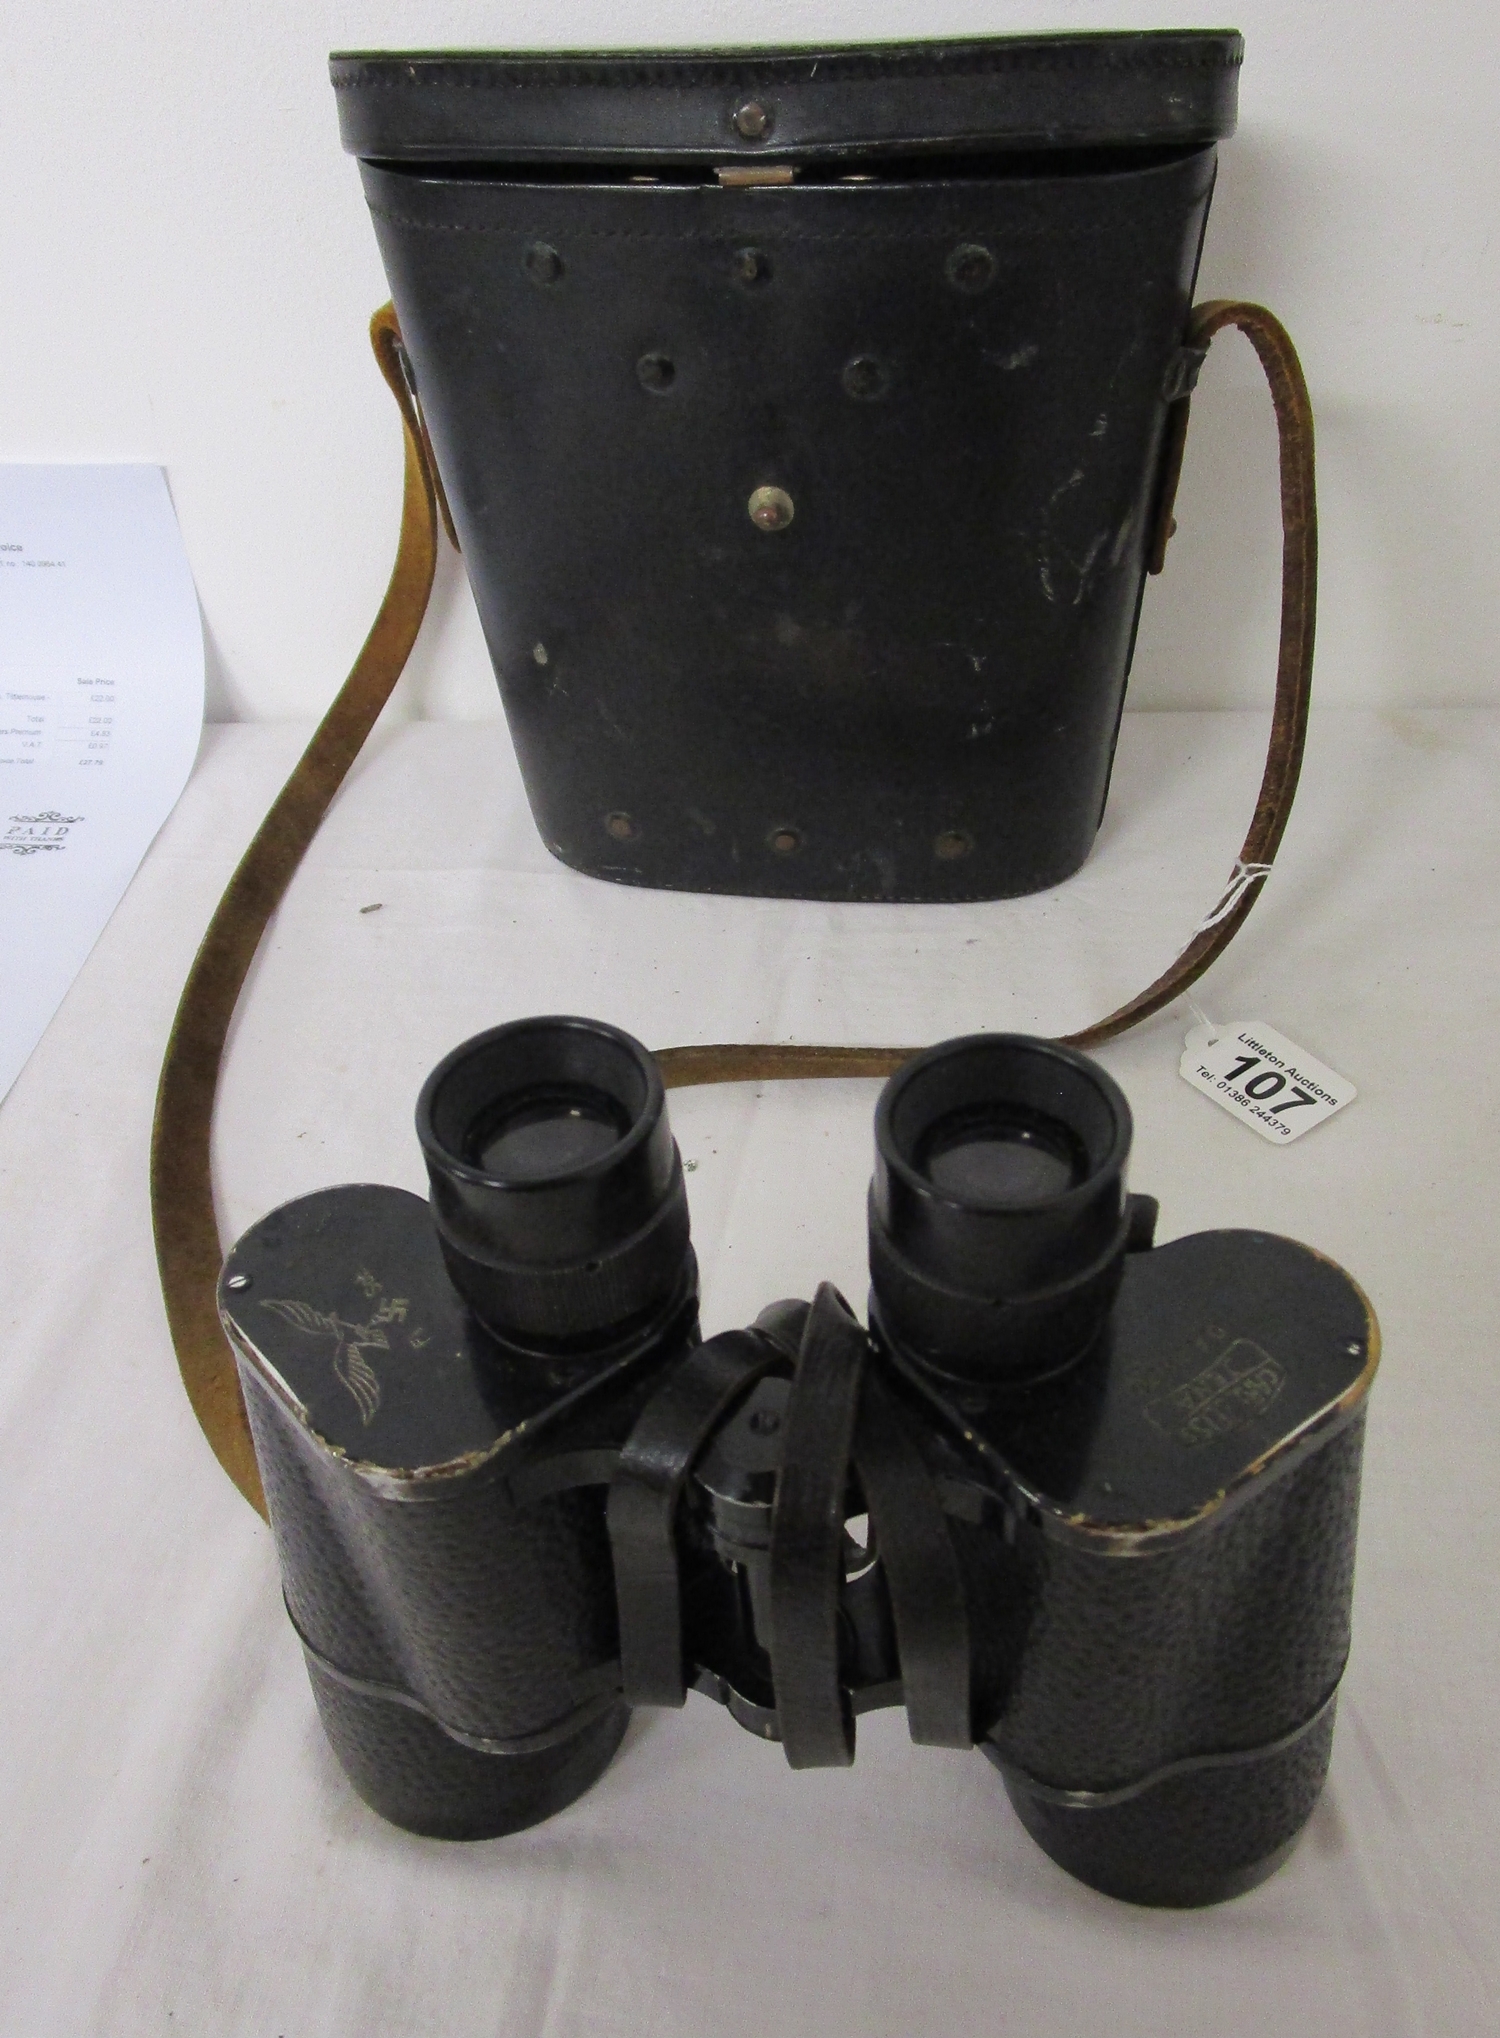 Nazi WWII Carl Zeiss 7x50 binoculars, marked with eagle and swastika